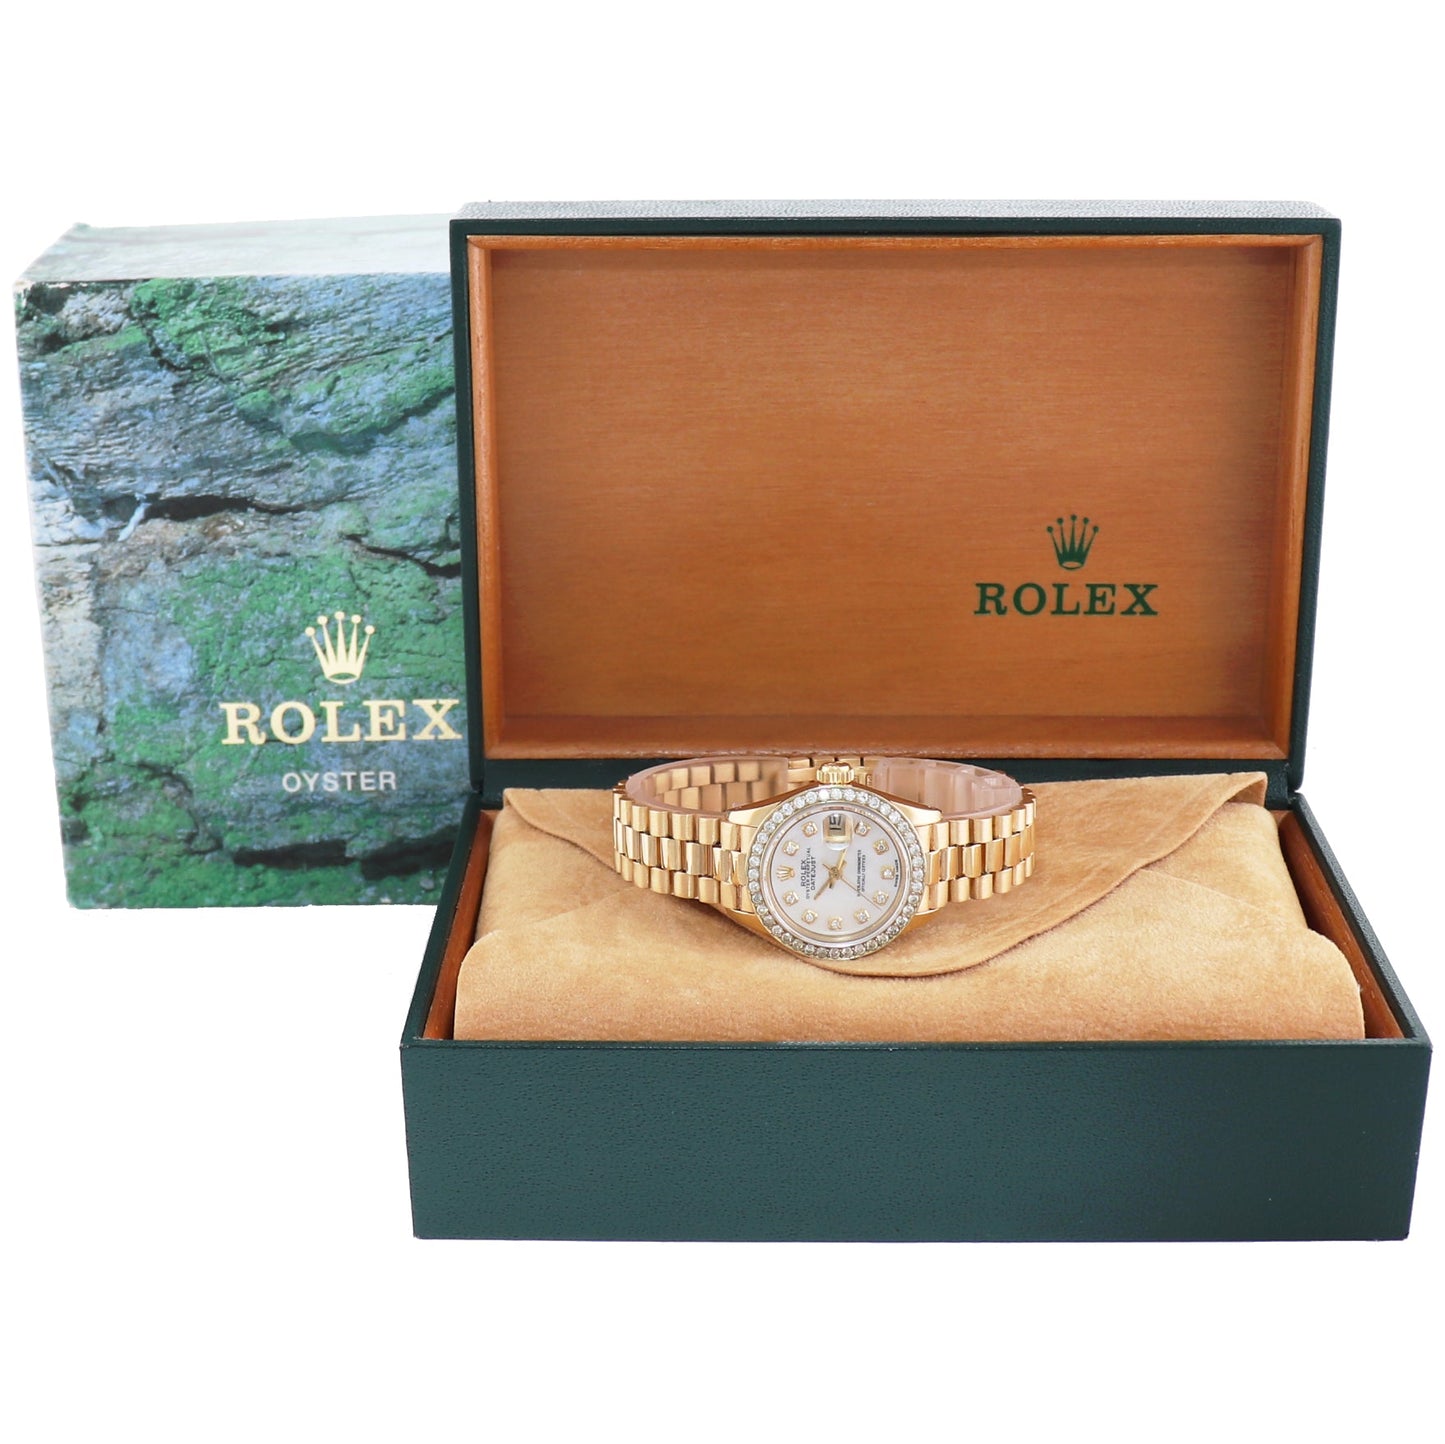 Pearl Diamond Ladies Rolex DateJust President 26mm 6917 Yellow Gold Watch Box